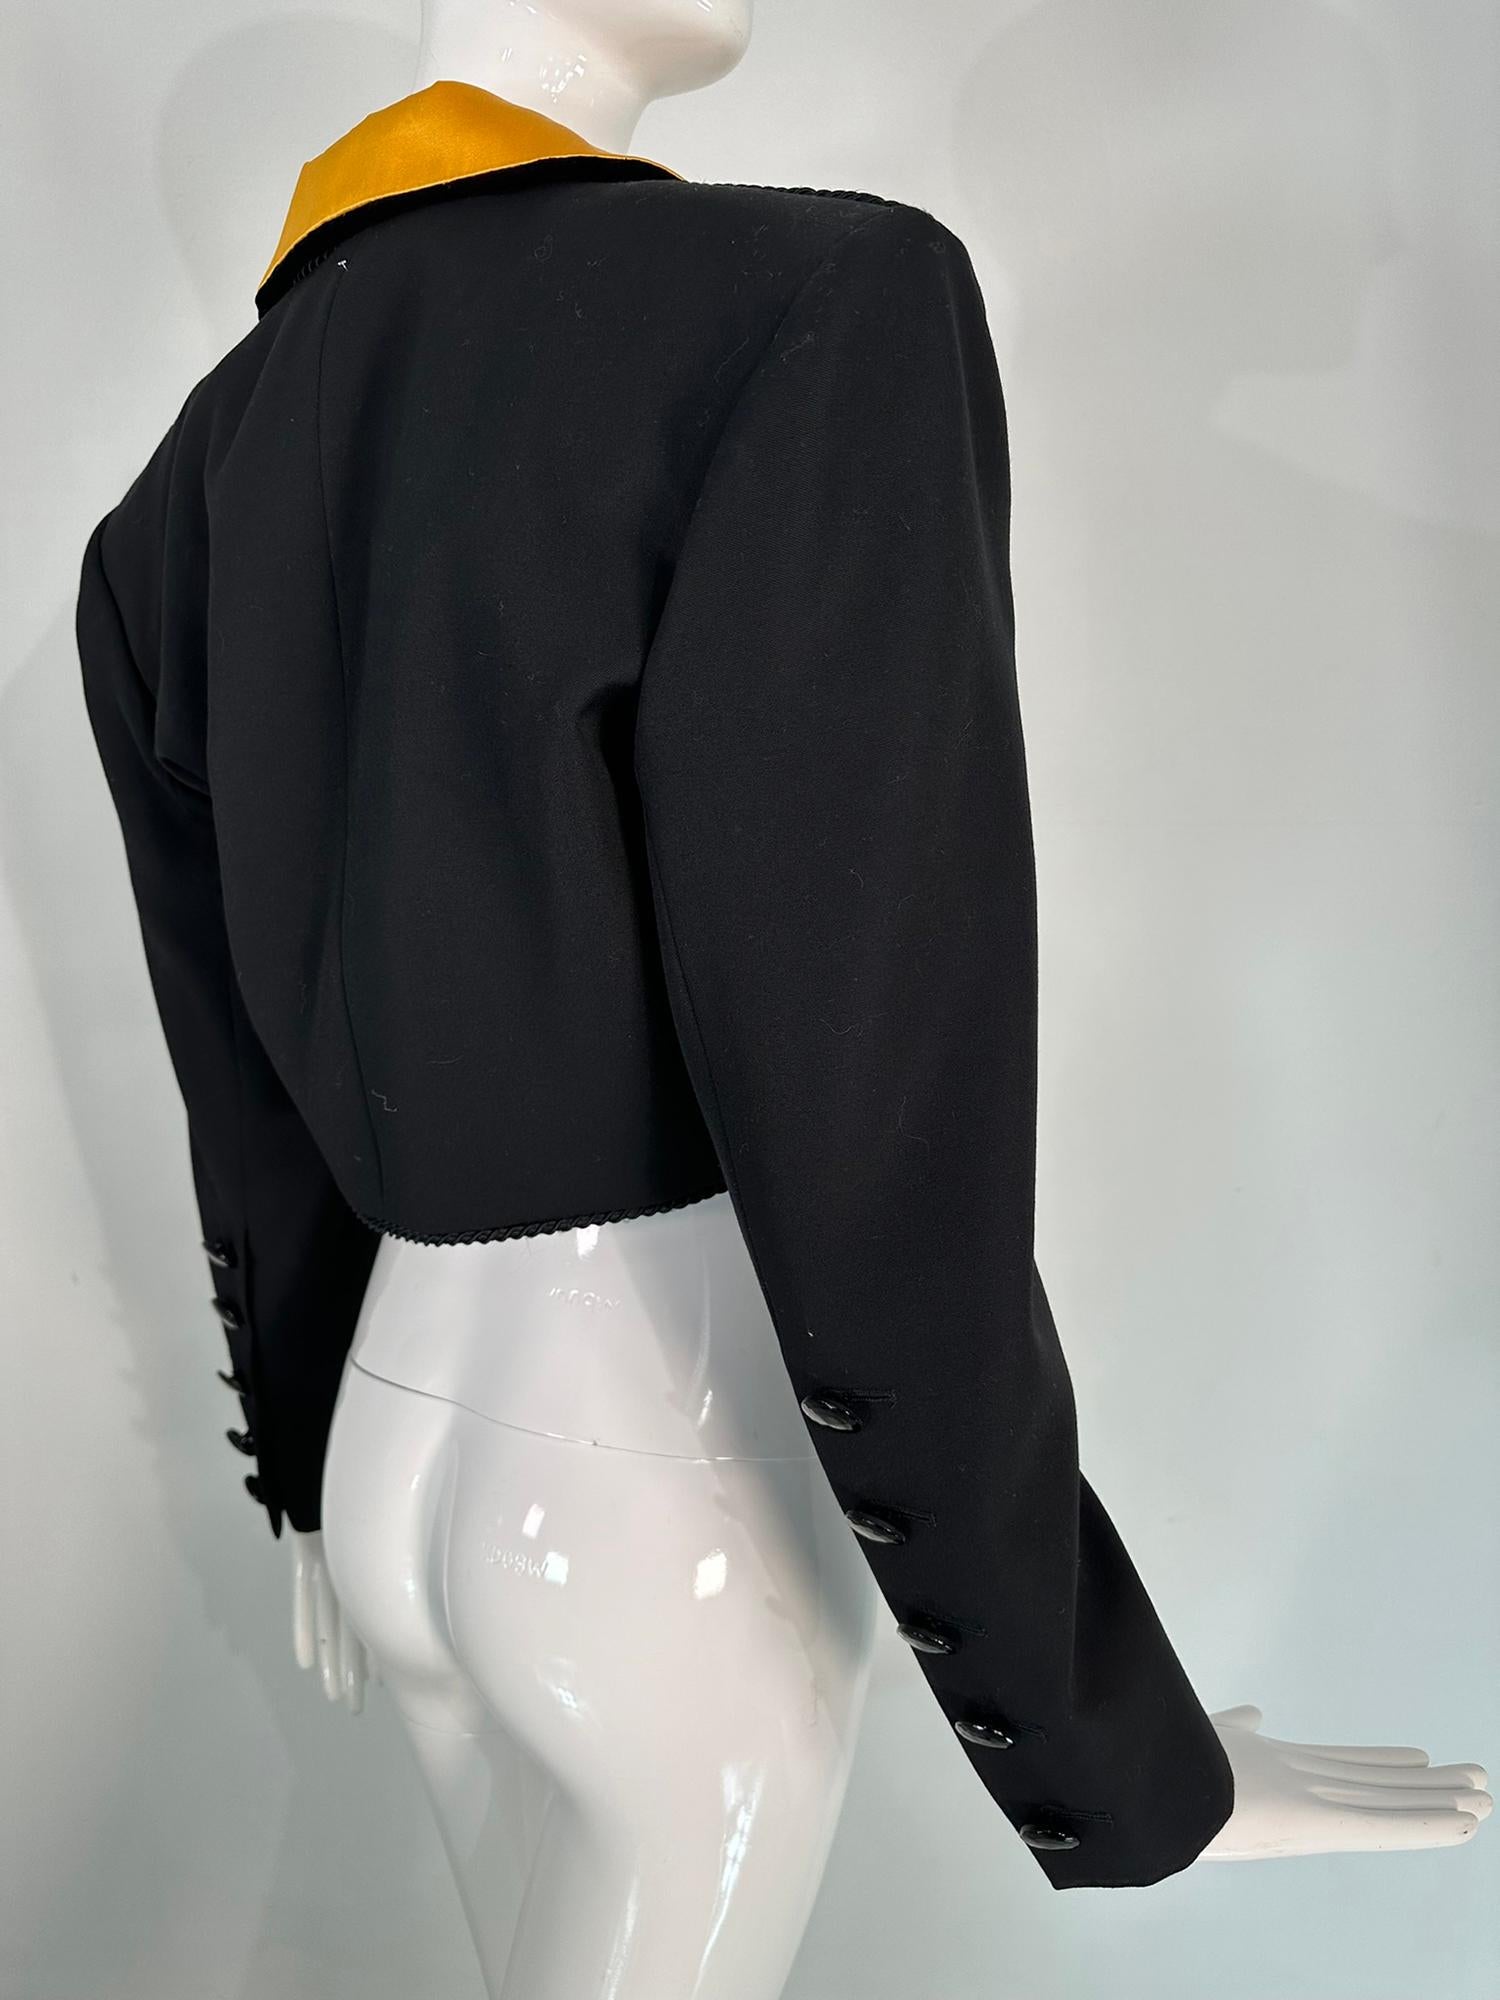 Yves Saint Laurent Rive Gauche Black Sequin Yellow Satin Cropped Jacket 1990s For Sale 7